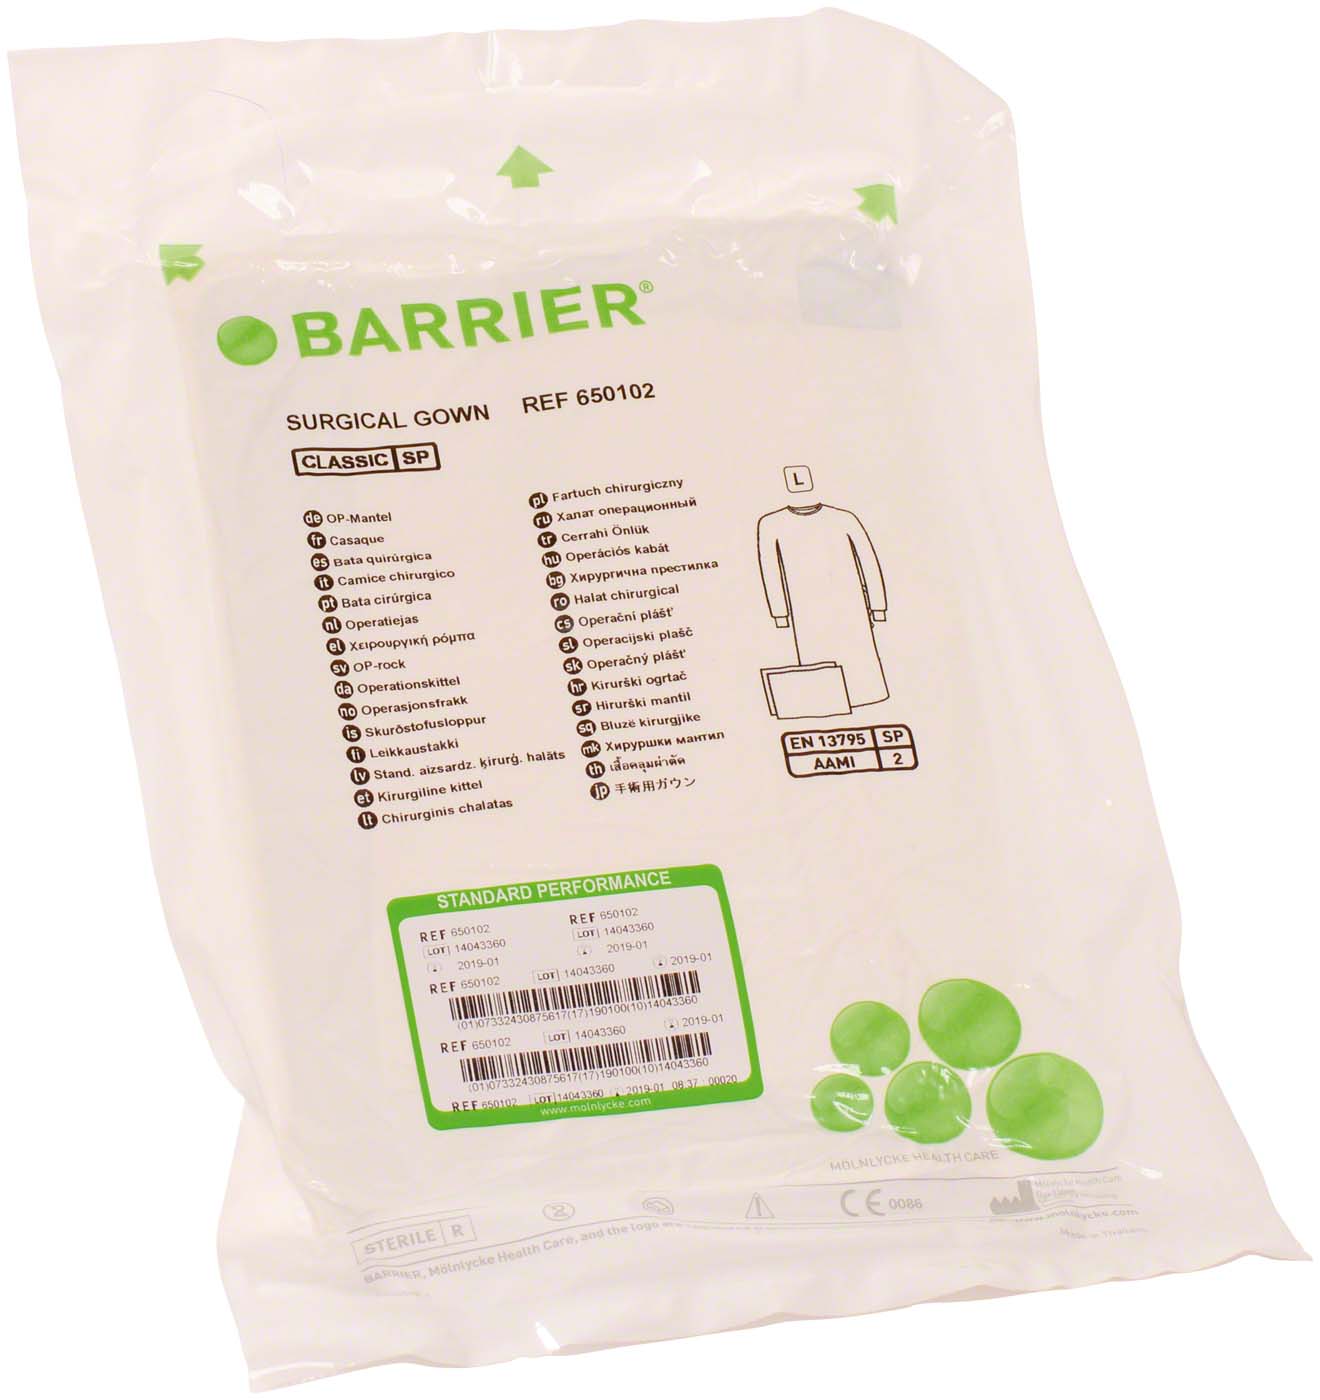 BARRIER® OP-Mantel Classic Standard Mölnlycke Health Care